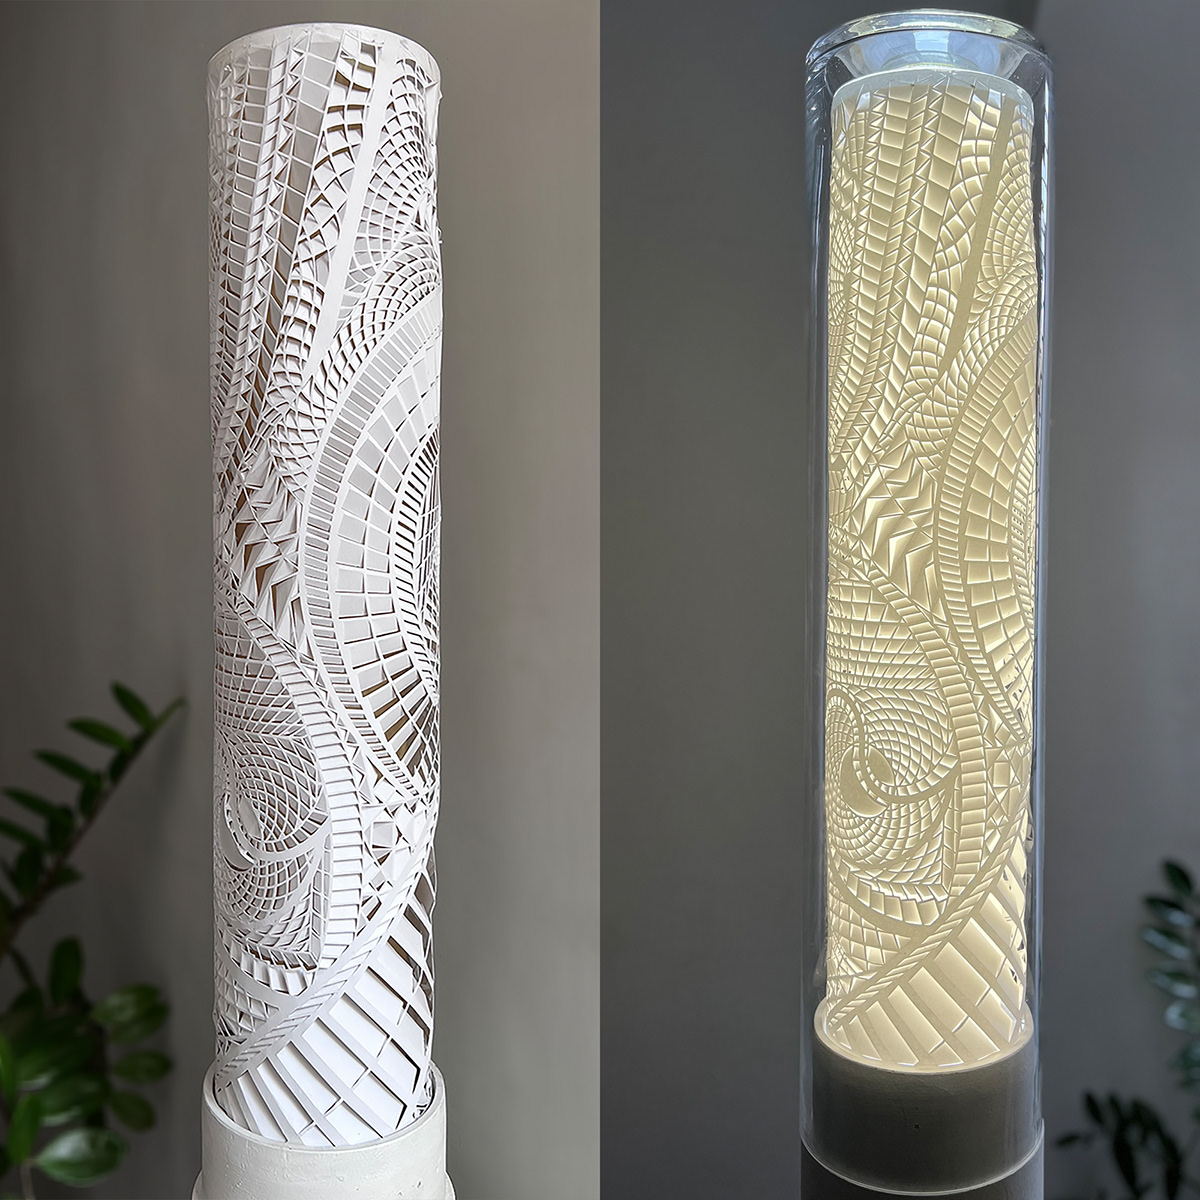 paper papercraft craft paper art papercut handmade Lamp light paper craft architecture